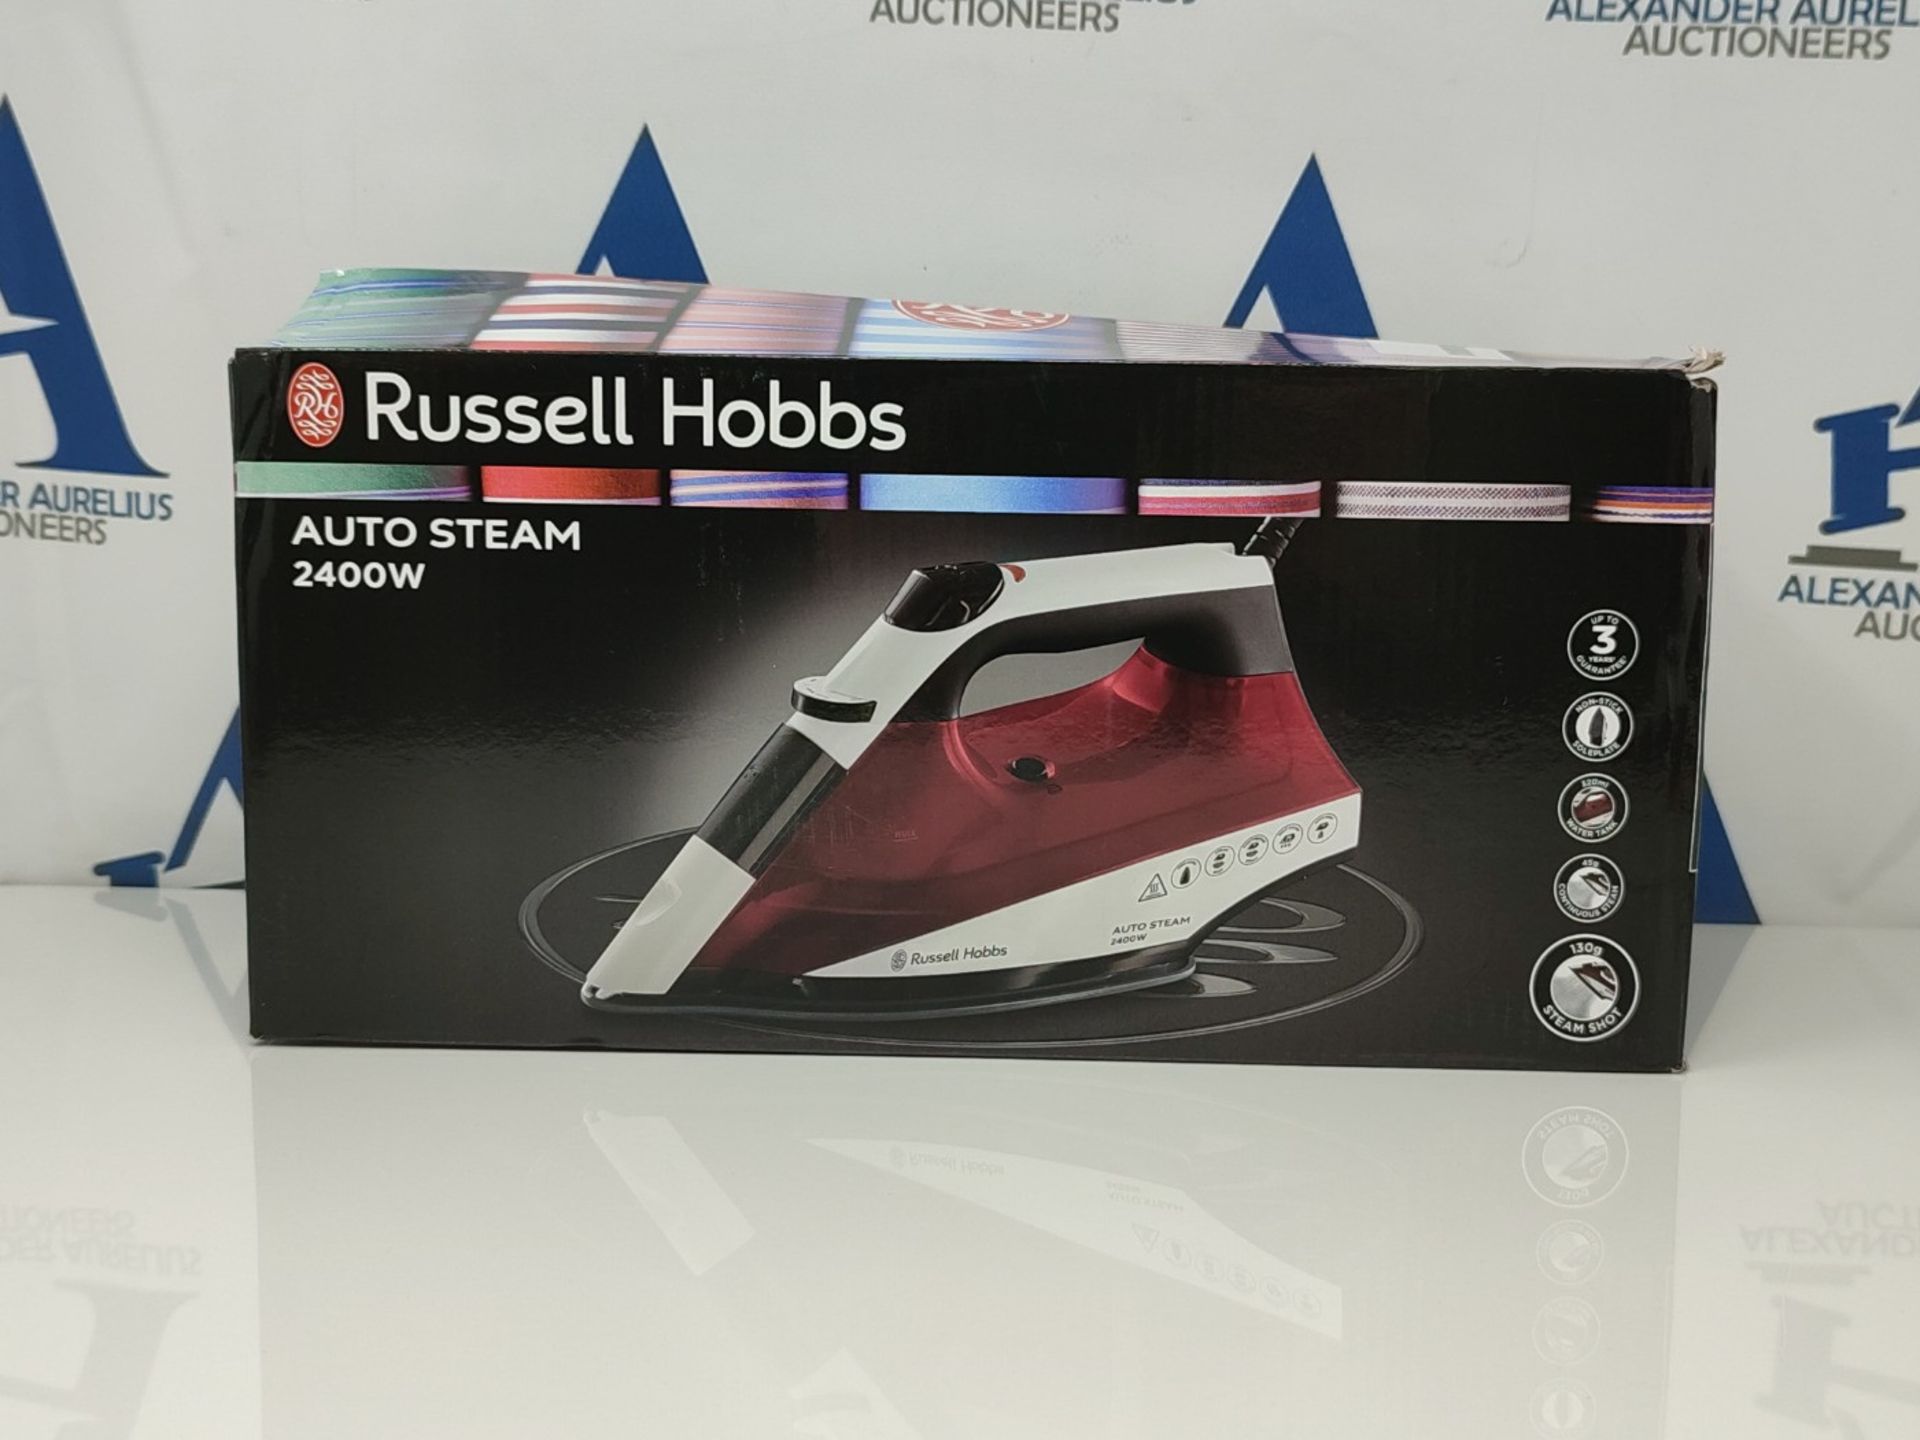 Russell Hobbs Auto Steam Pro Non-Stick Iron 22520, 2400 W, White and Red - Bild 2 aus 3